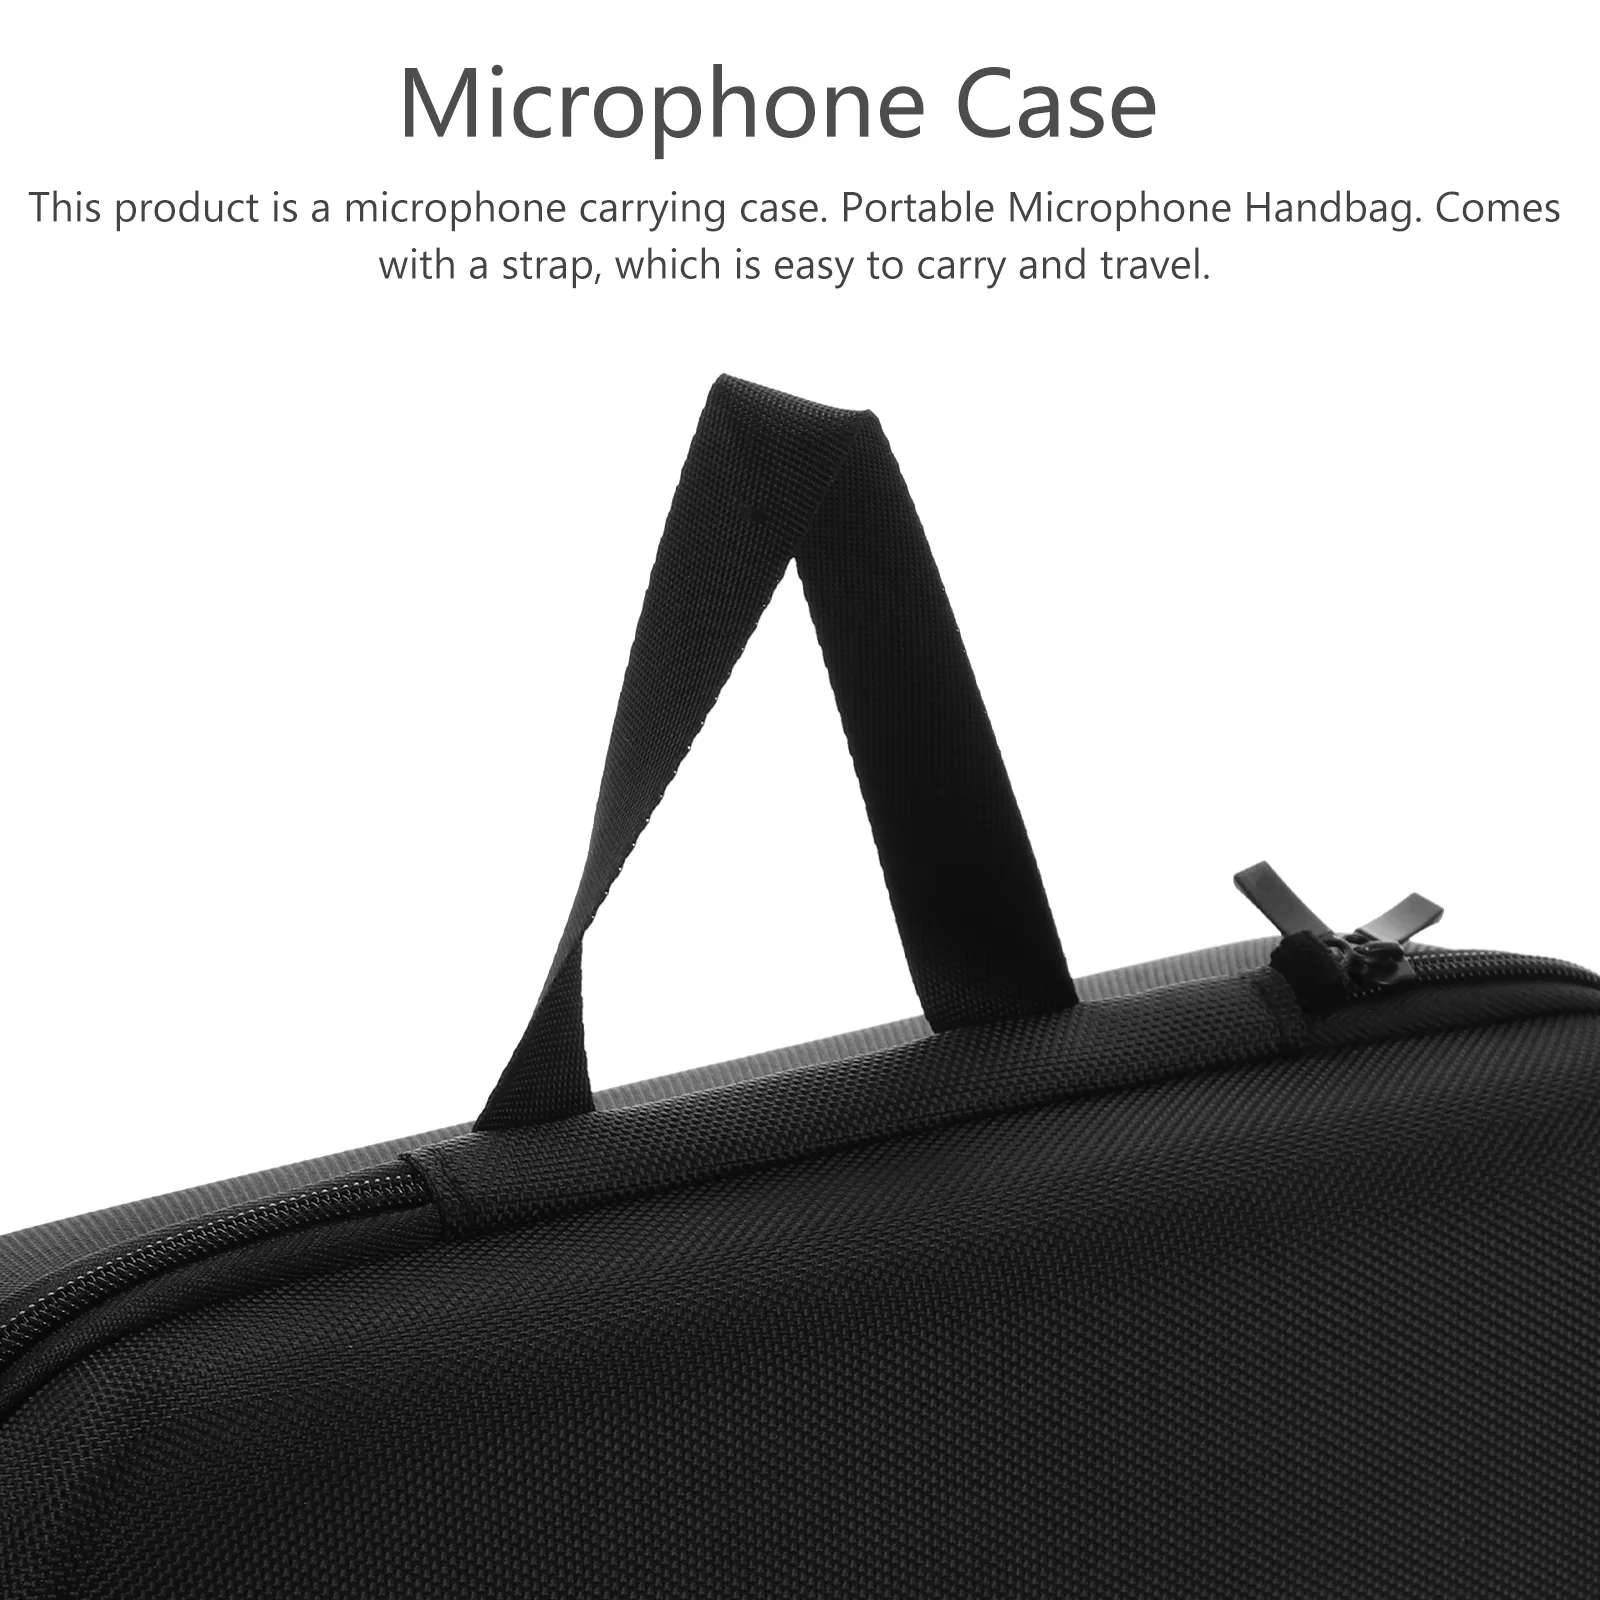 Microphone Storage Bag Carrying Waterproof Cases Portable Handbag Simple Handheld Pouch Organizer enlarge